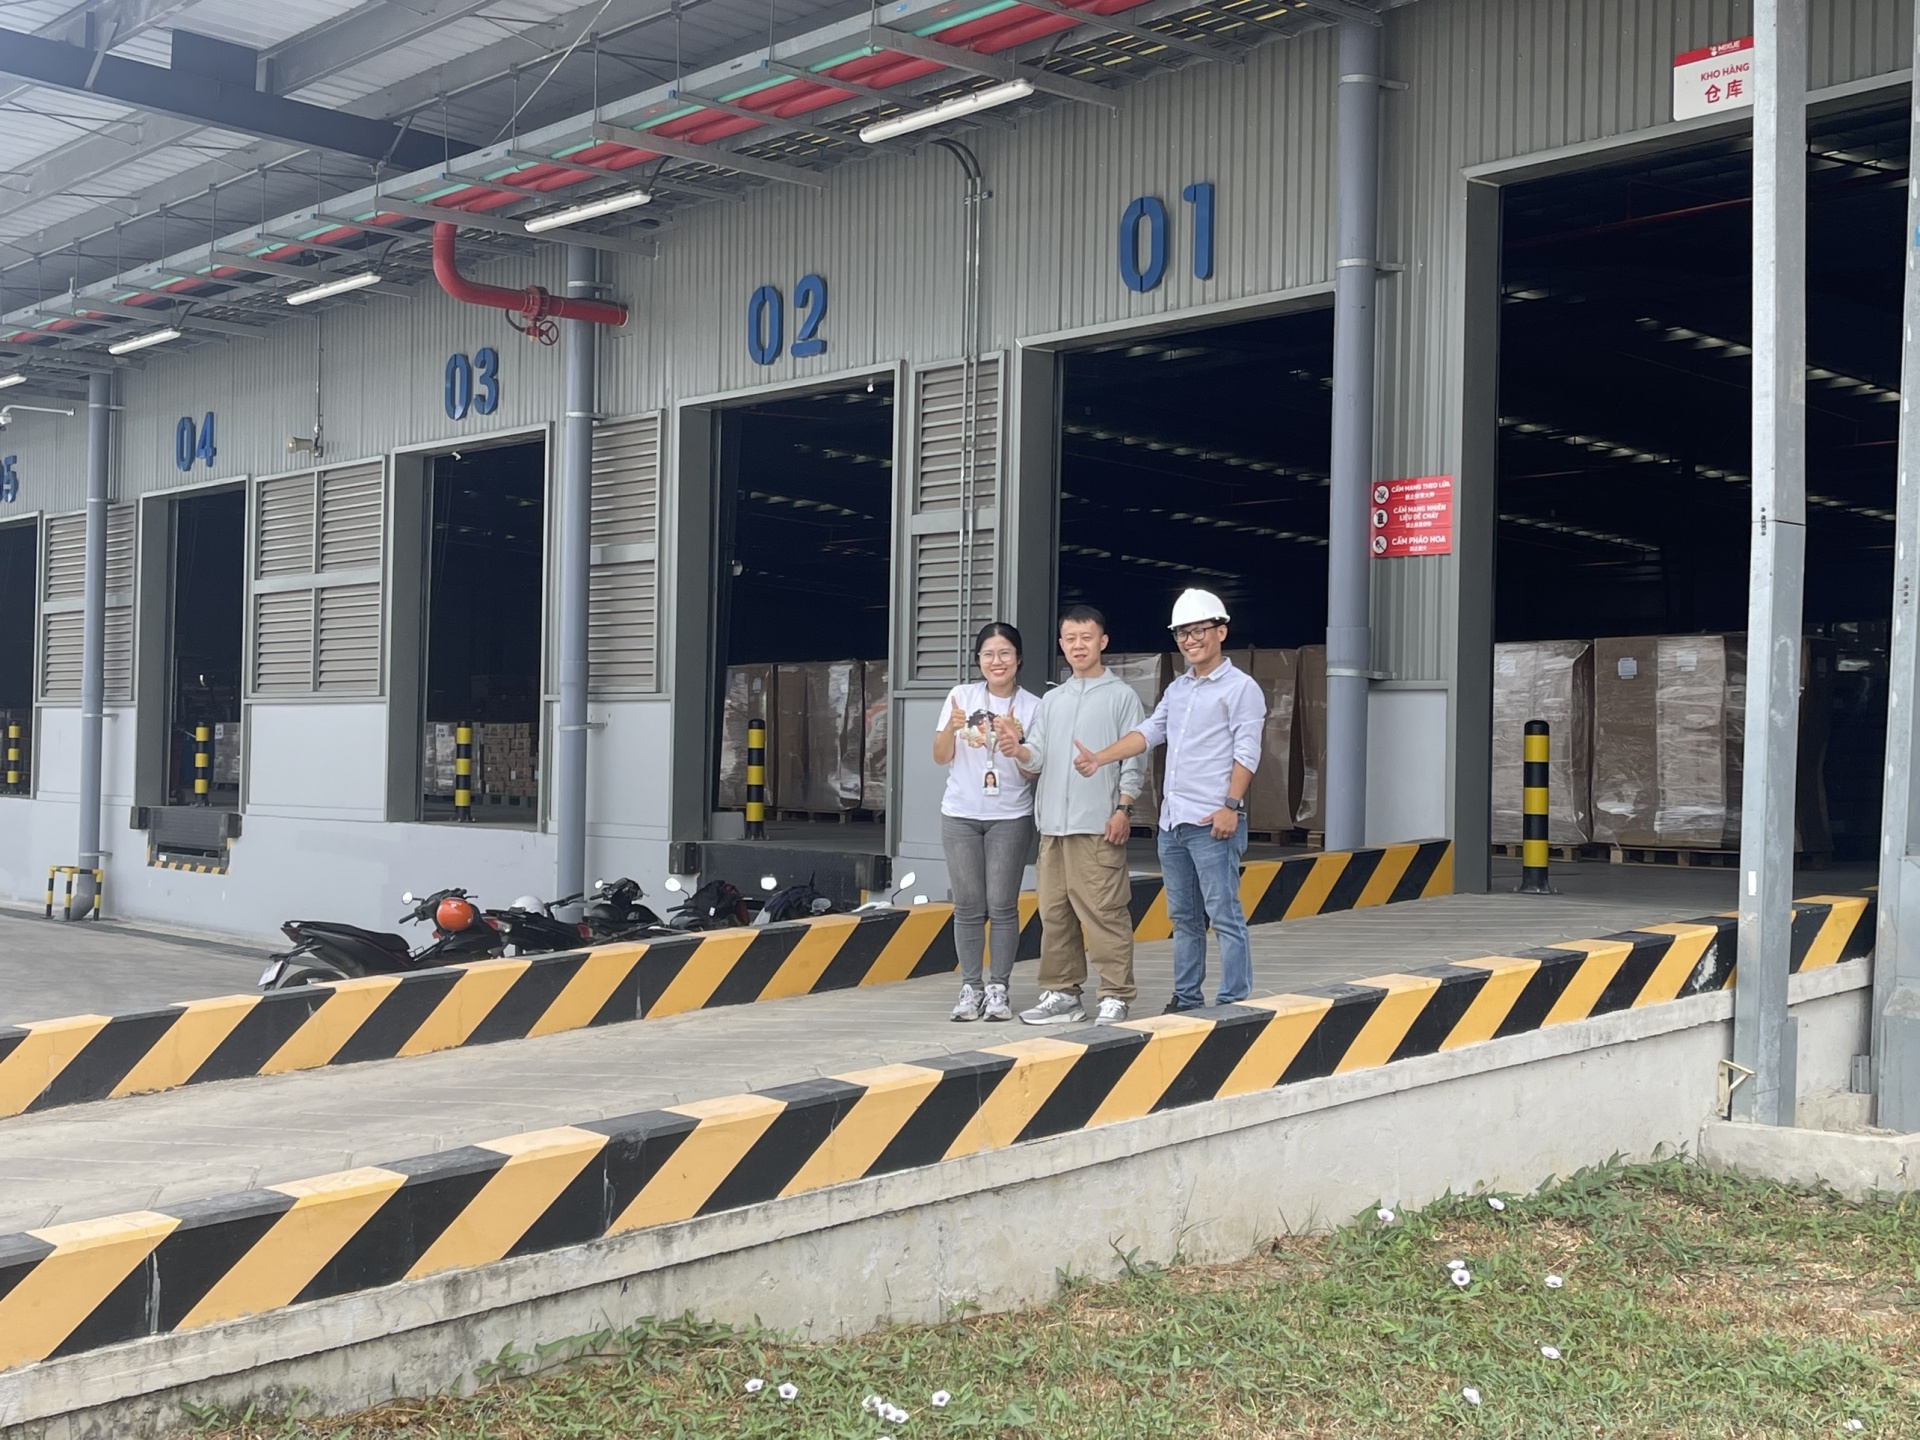 Cainiao PAT Logistics Park welcomes warehousing partner Mixue